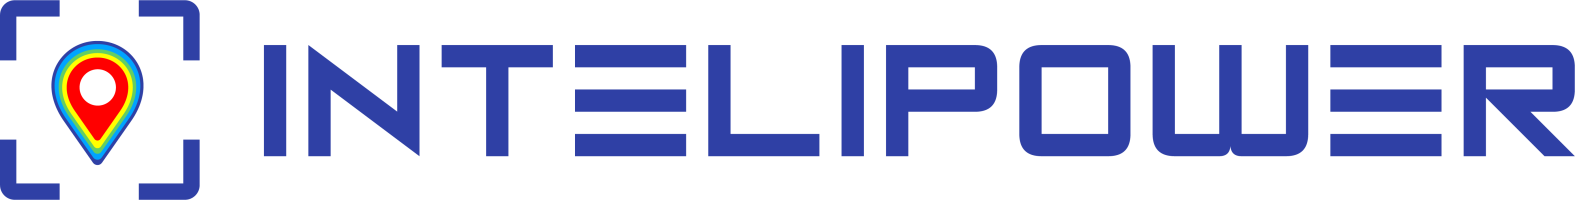 Intelipower Logo